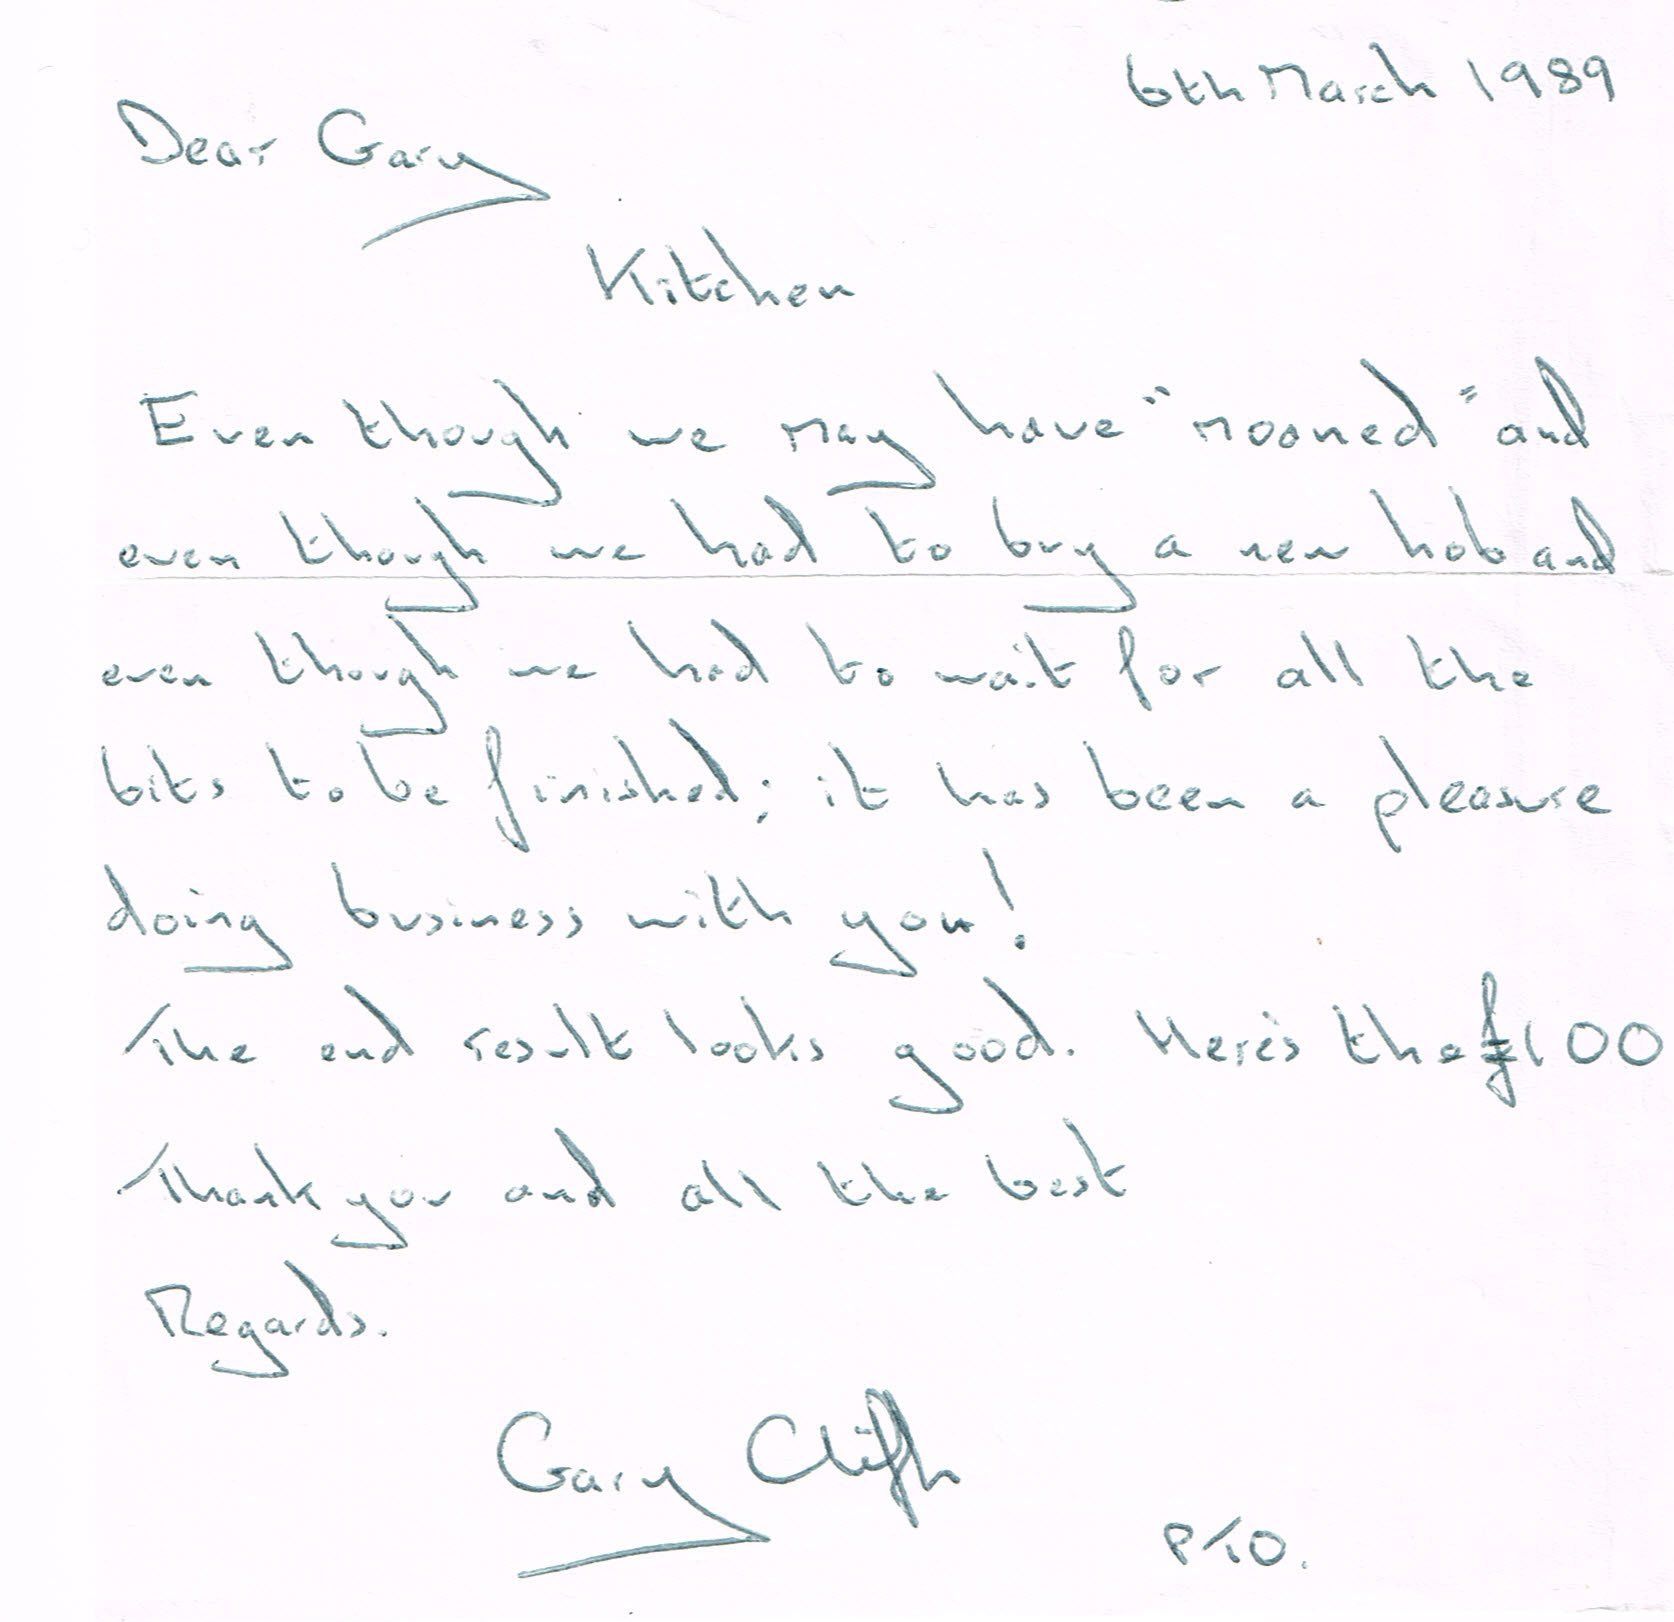 testimonial from Gary in 1989